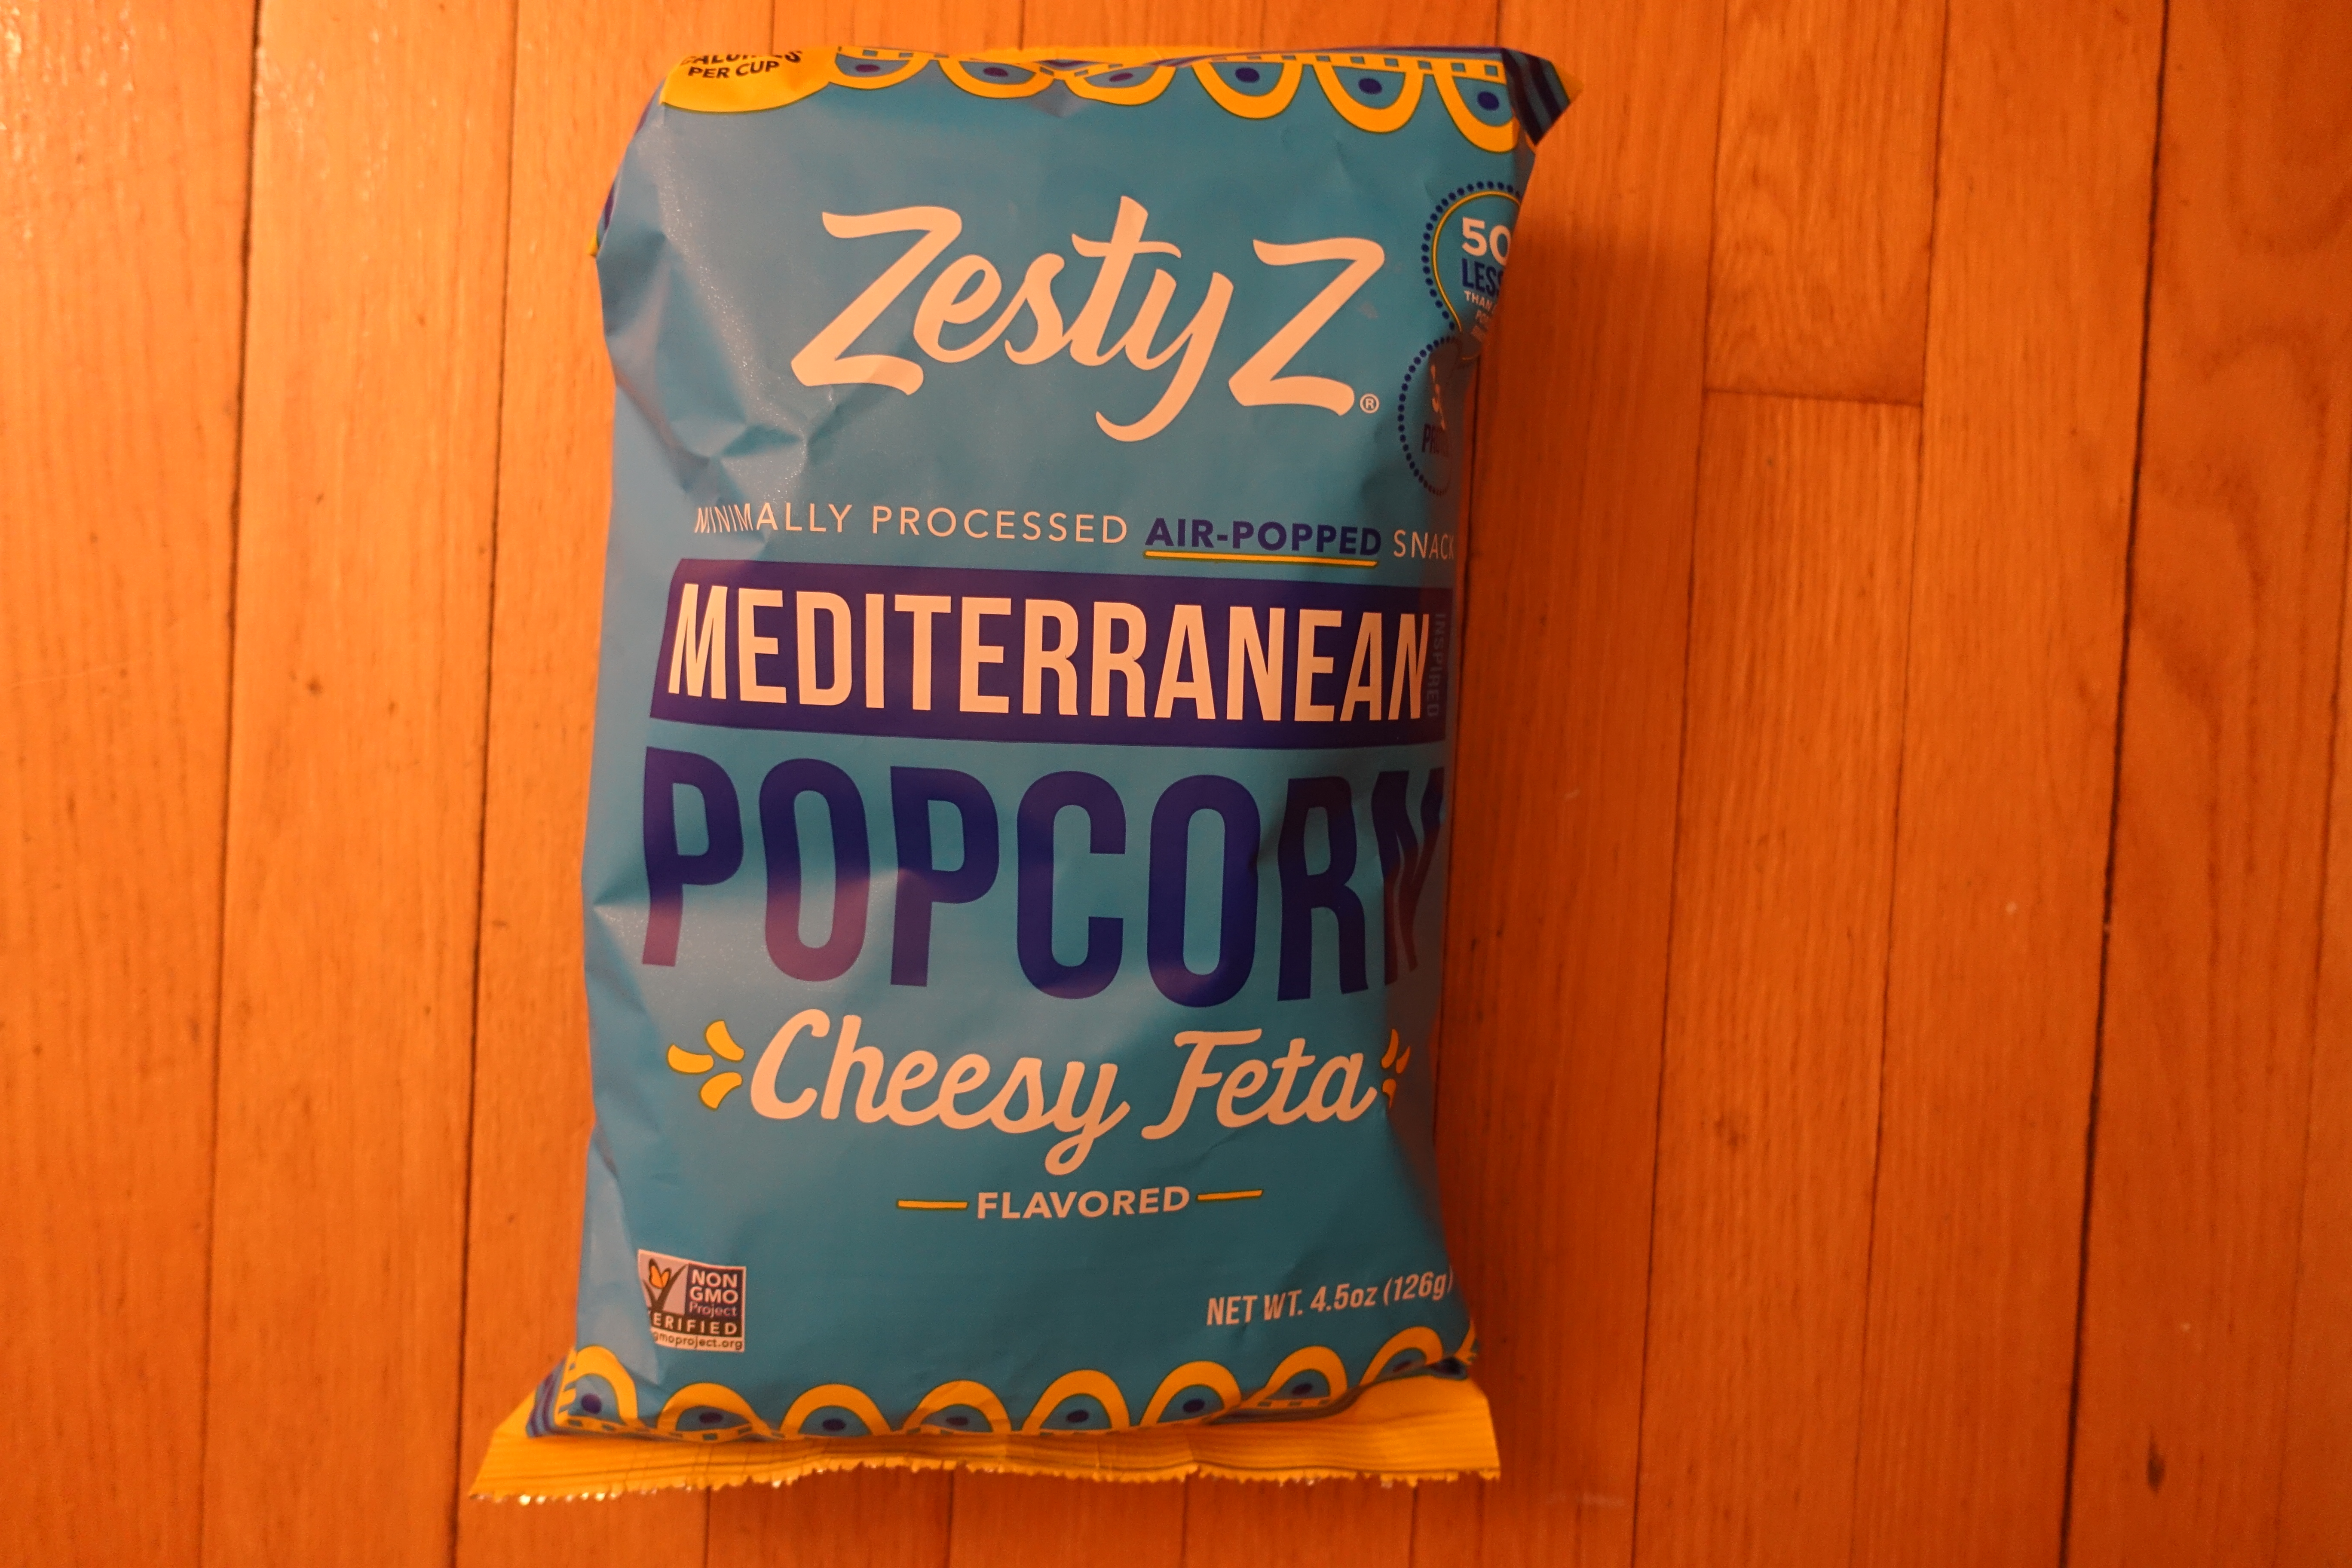 Zesty Z's Mediterranean Feta